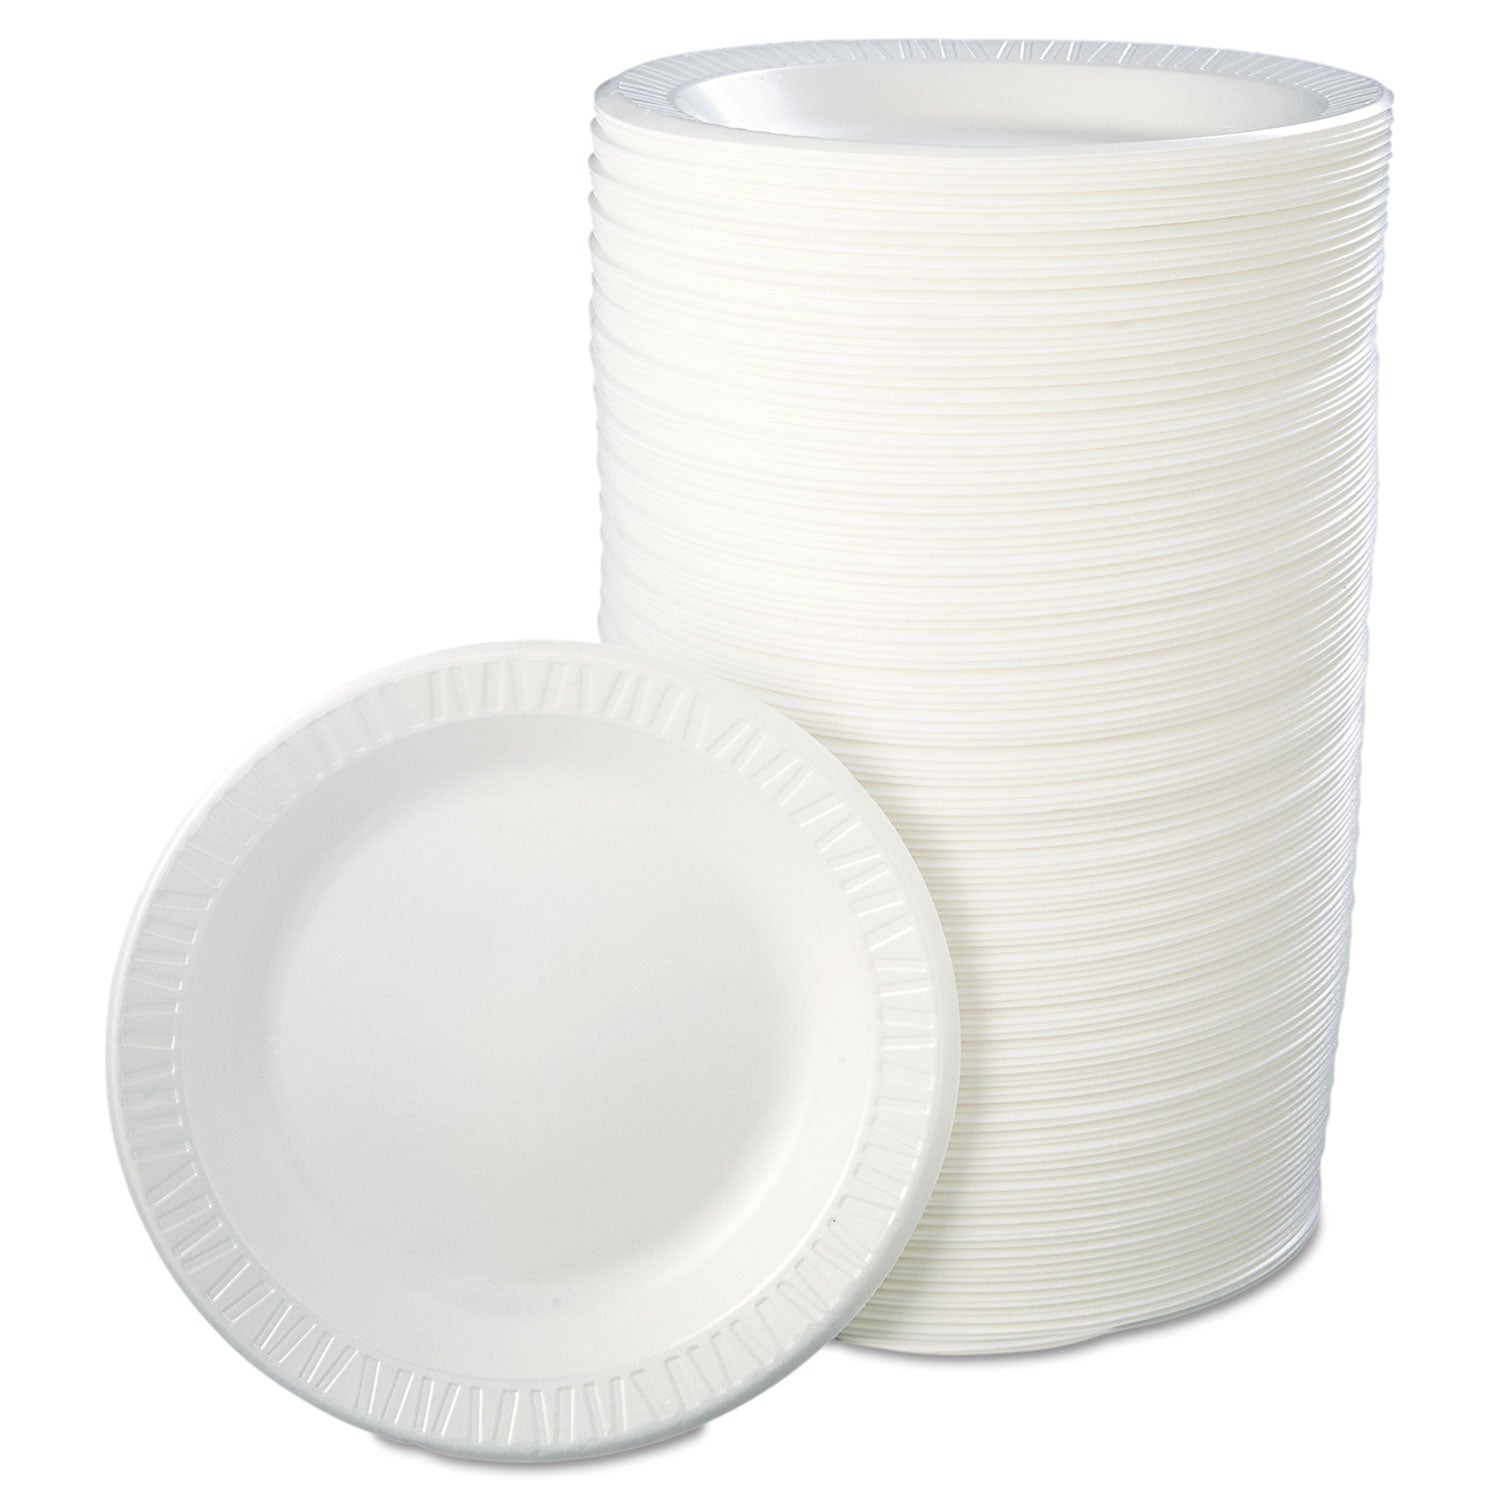 Quiet Classic Laminated Foam Dinnerware, Plate, 10.25" dia, White, 125/Pack, 4 Packs/Carton - 